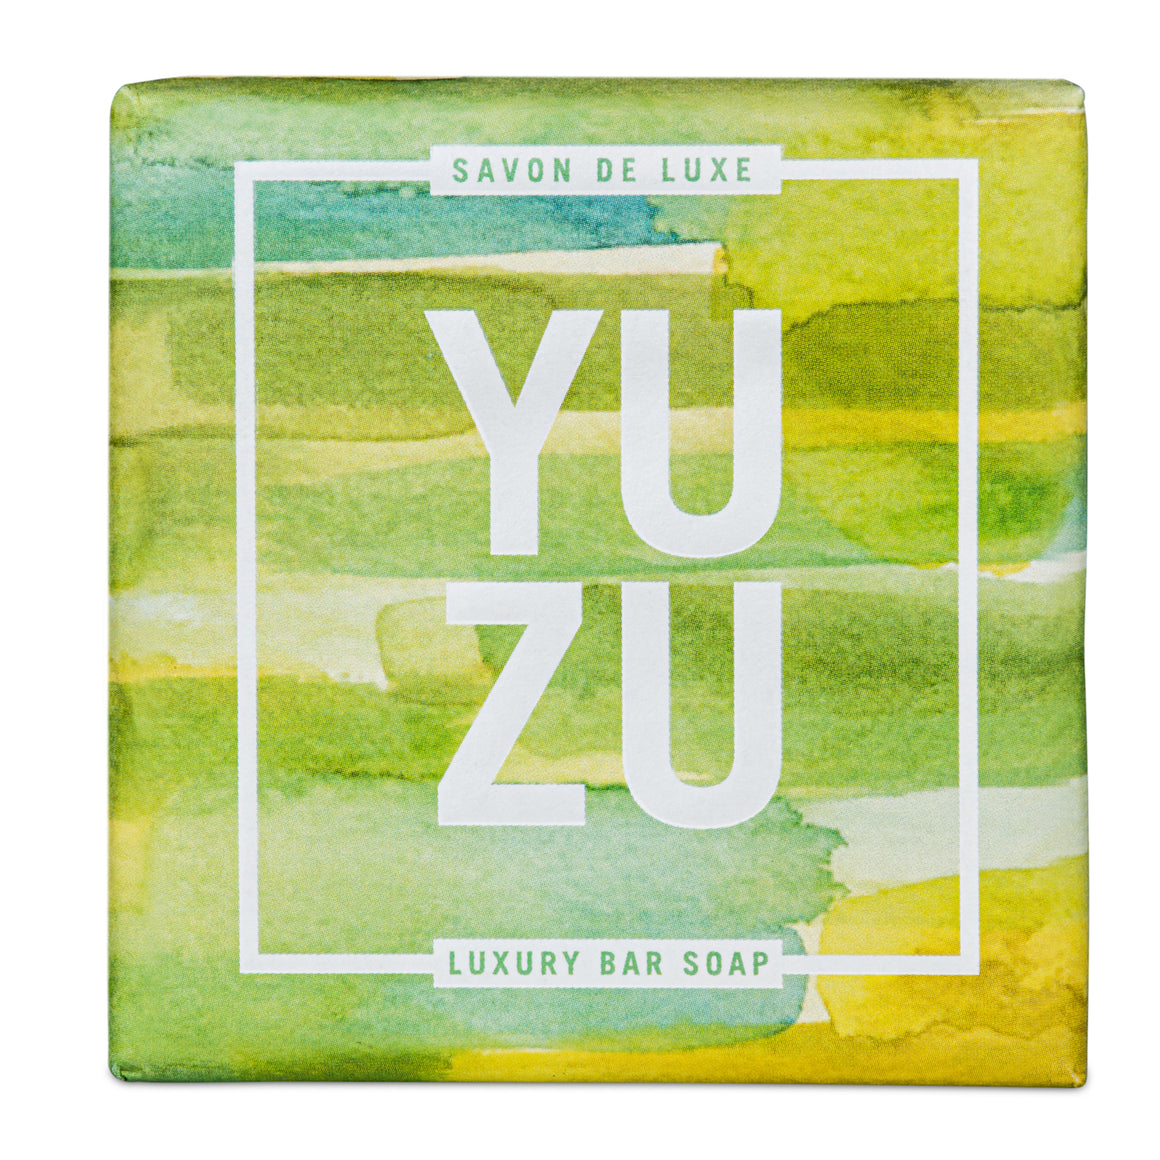 Yuzu Summer Exfoliating Gift Soap